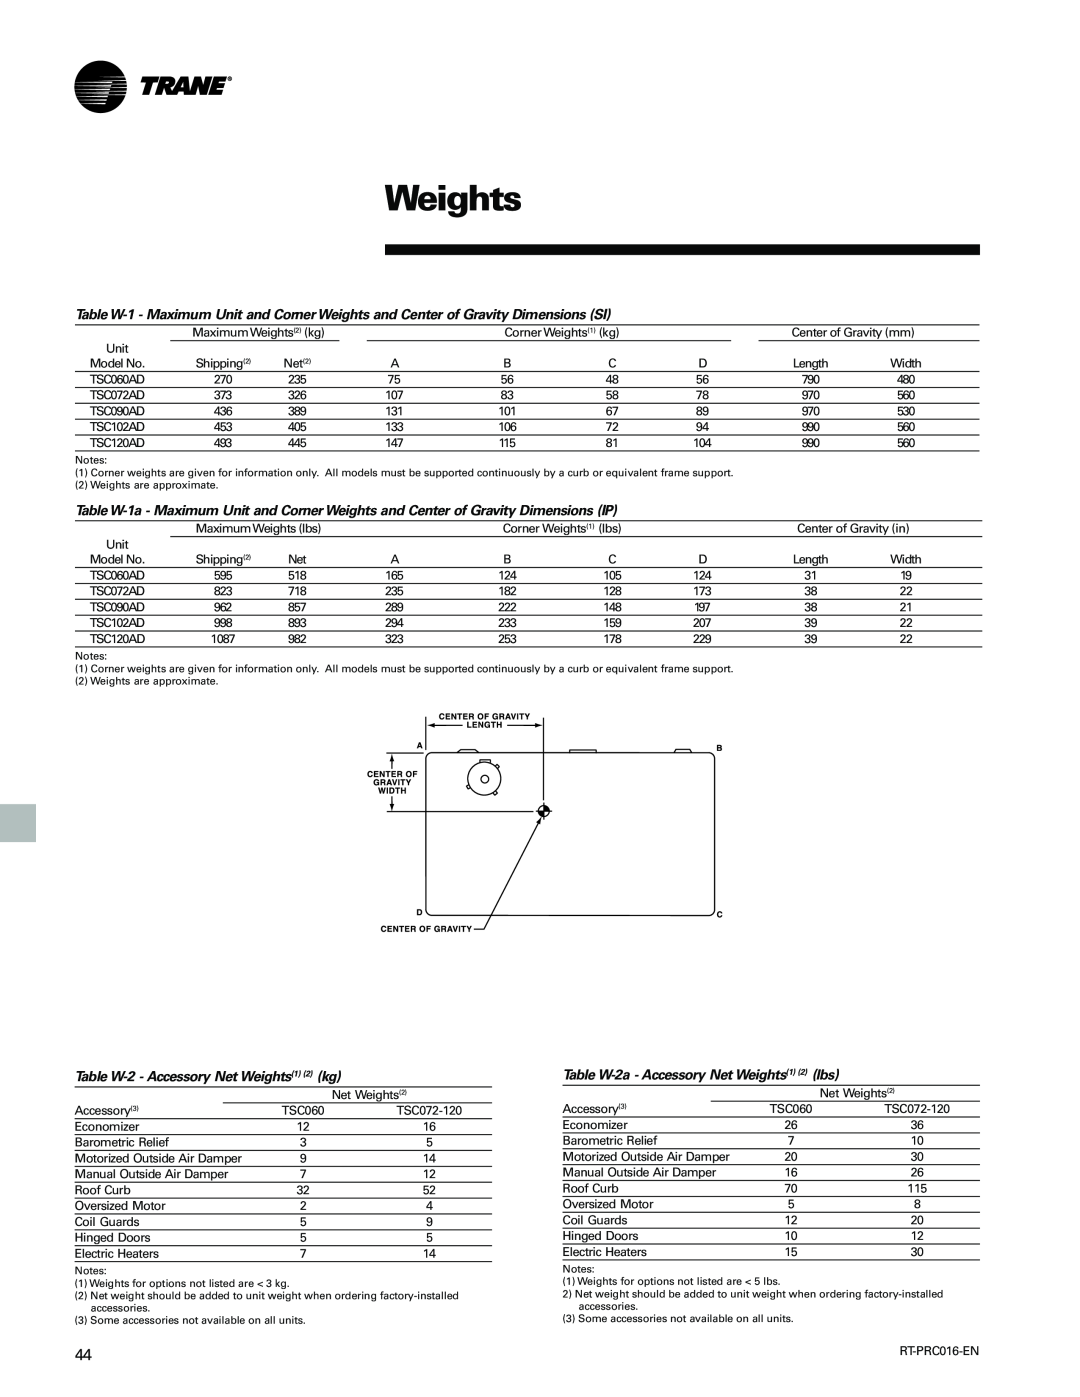 Trane TSC060-120 manual Table W-2- Accessory Net Weights1 2 kg, Table W-2a- Accessory Net Weights1 2 lbs 